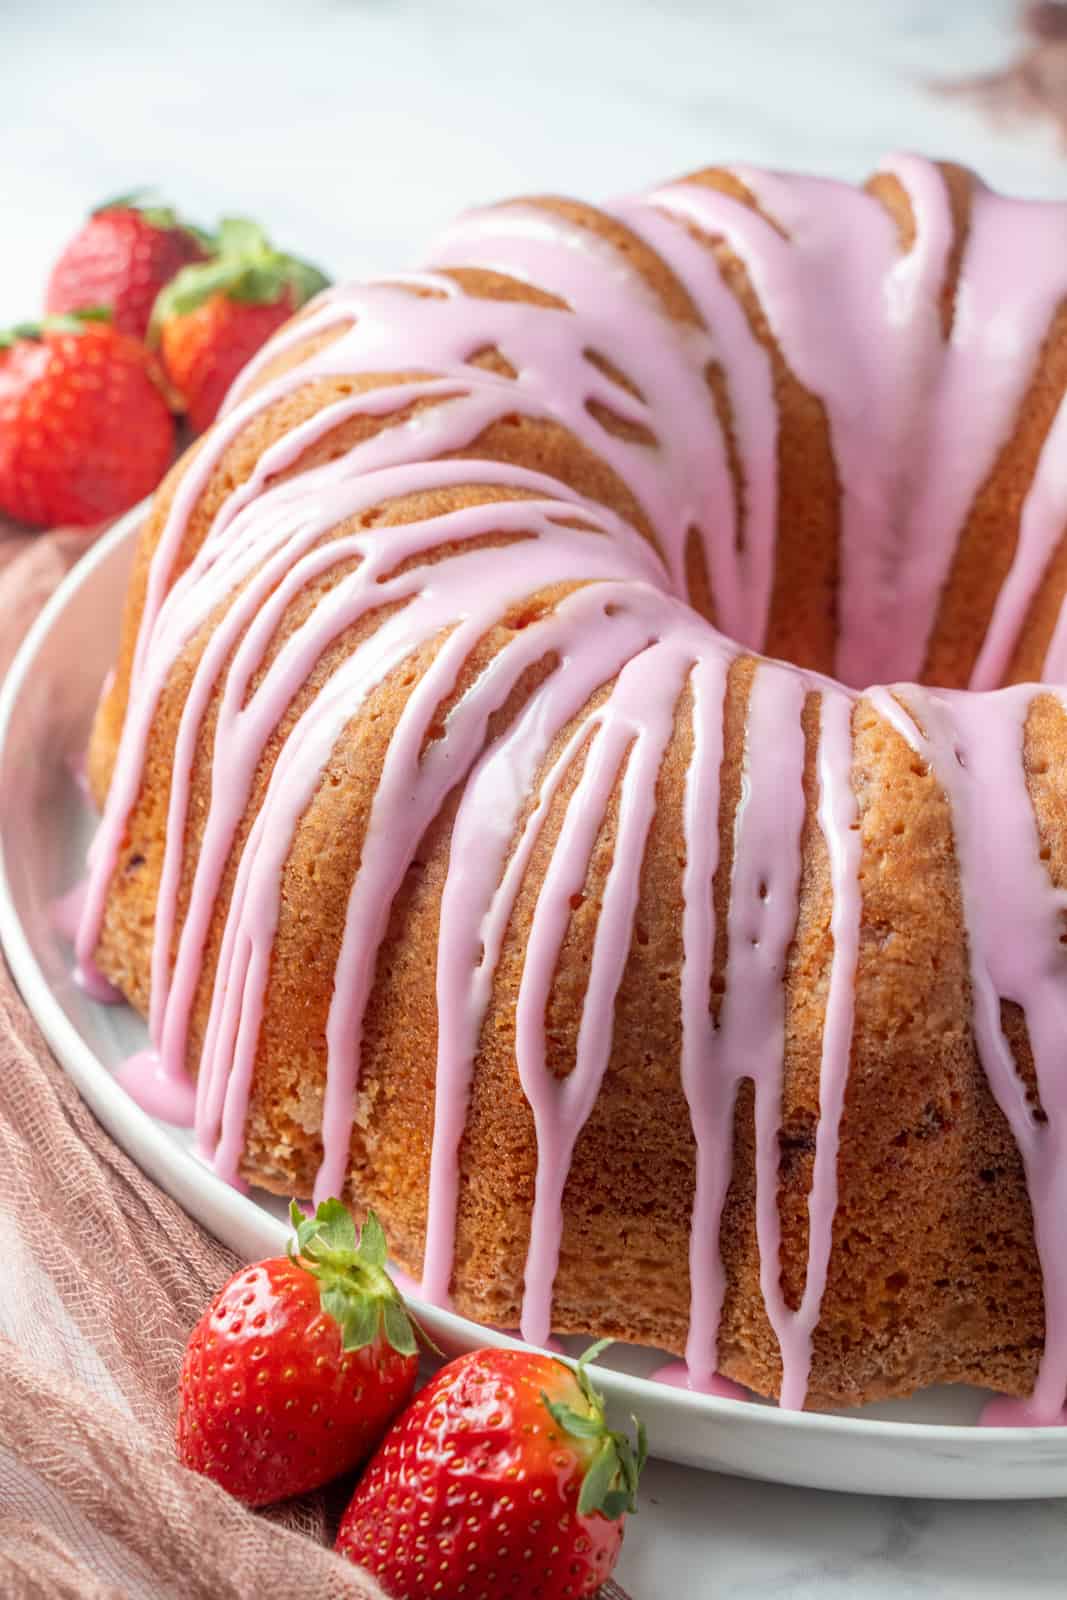 Photo of finished strawberry cake glazed on serving platter with strawberry garnish